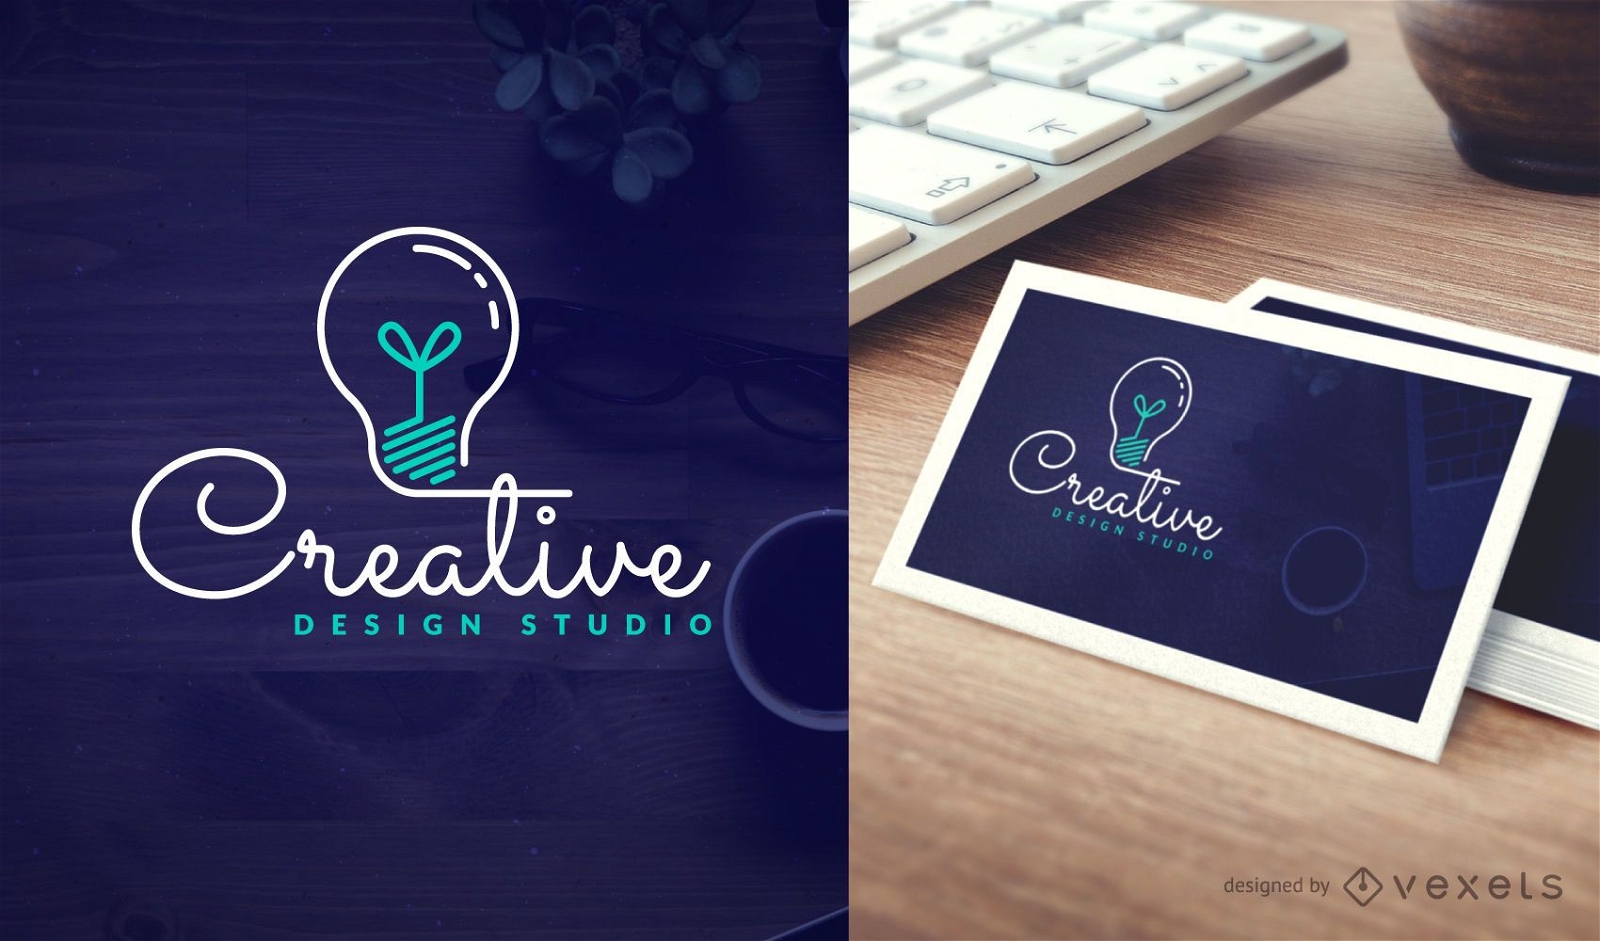 Creative design studio logo template